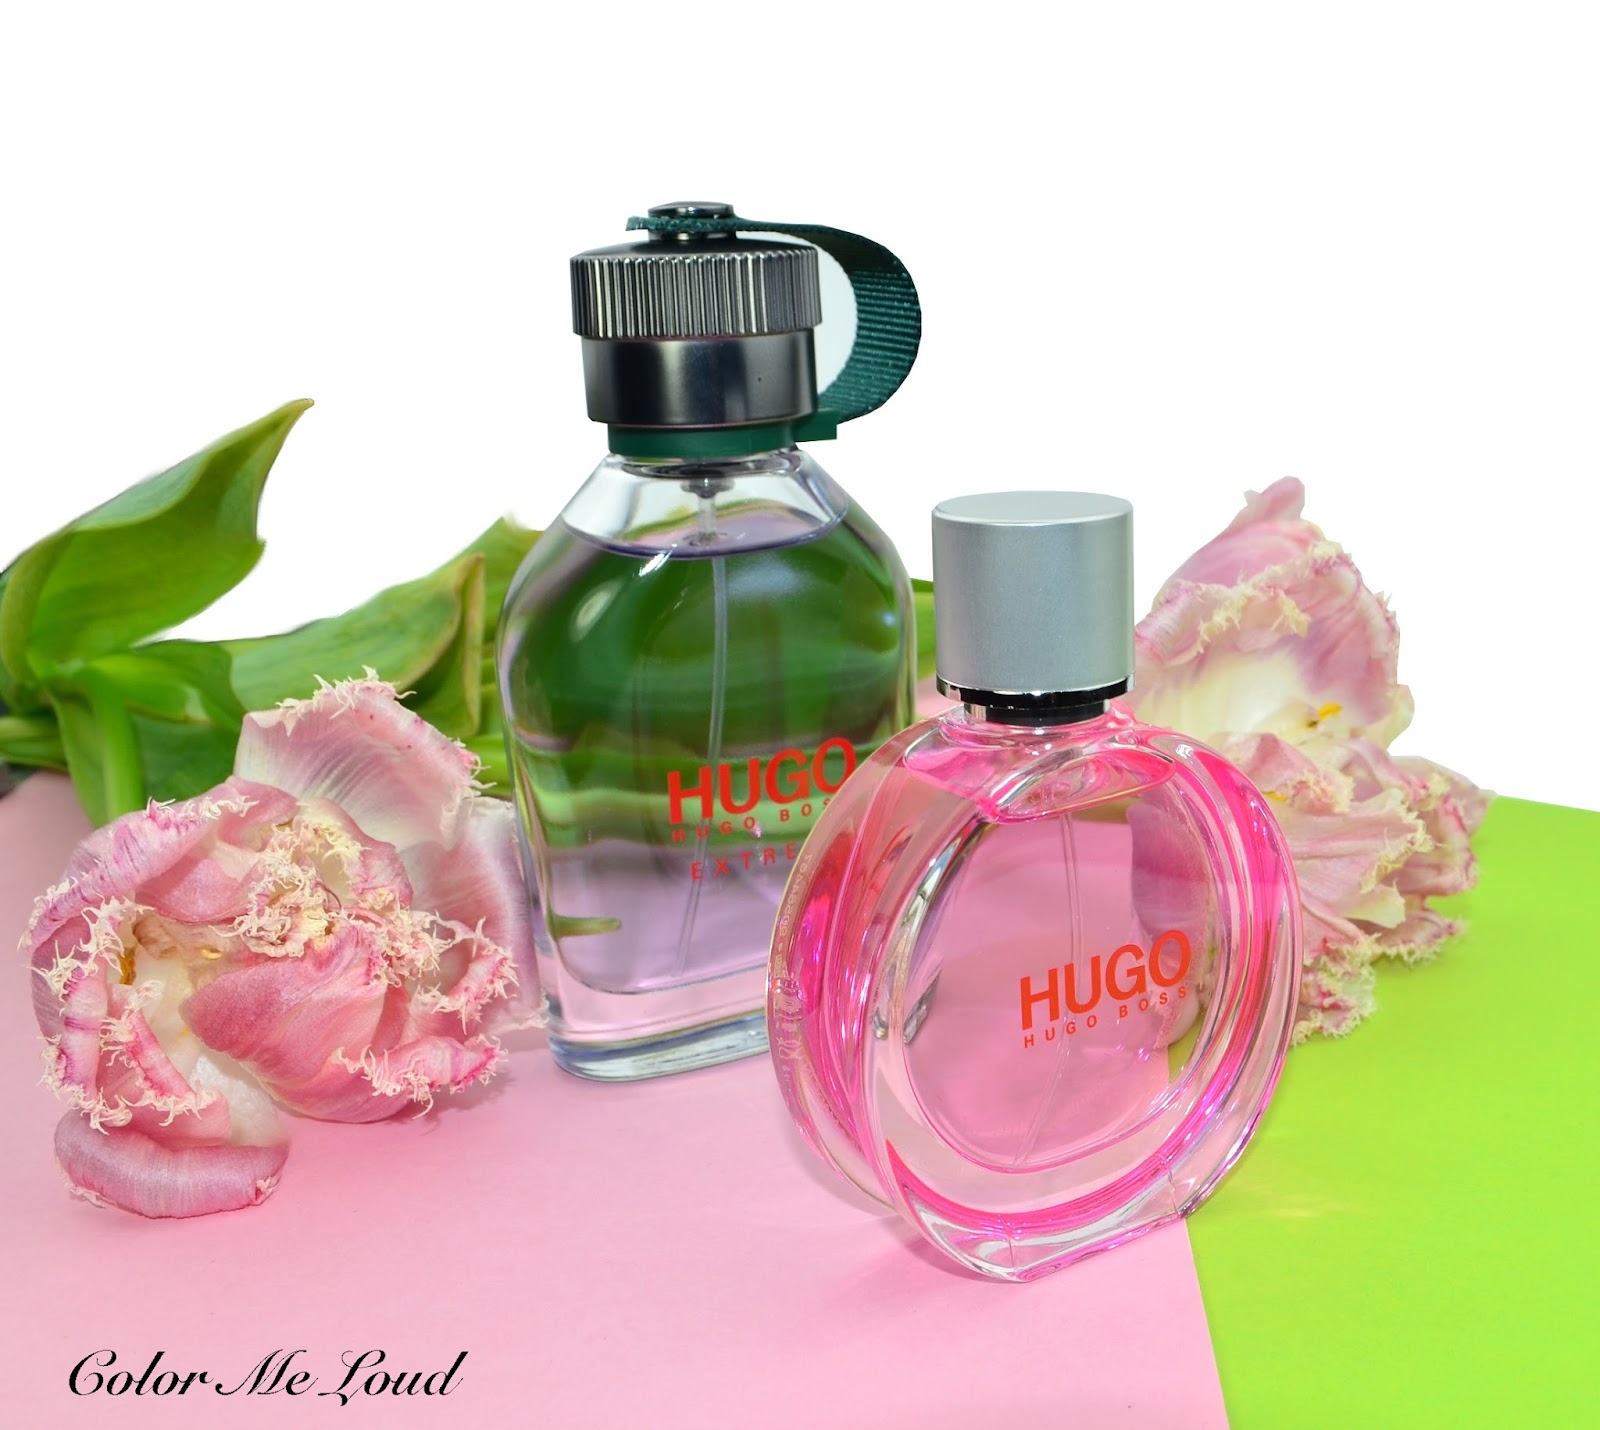 Hugo Boss Woman Extreme EDP 75 ml - The Ultimate Fragrance